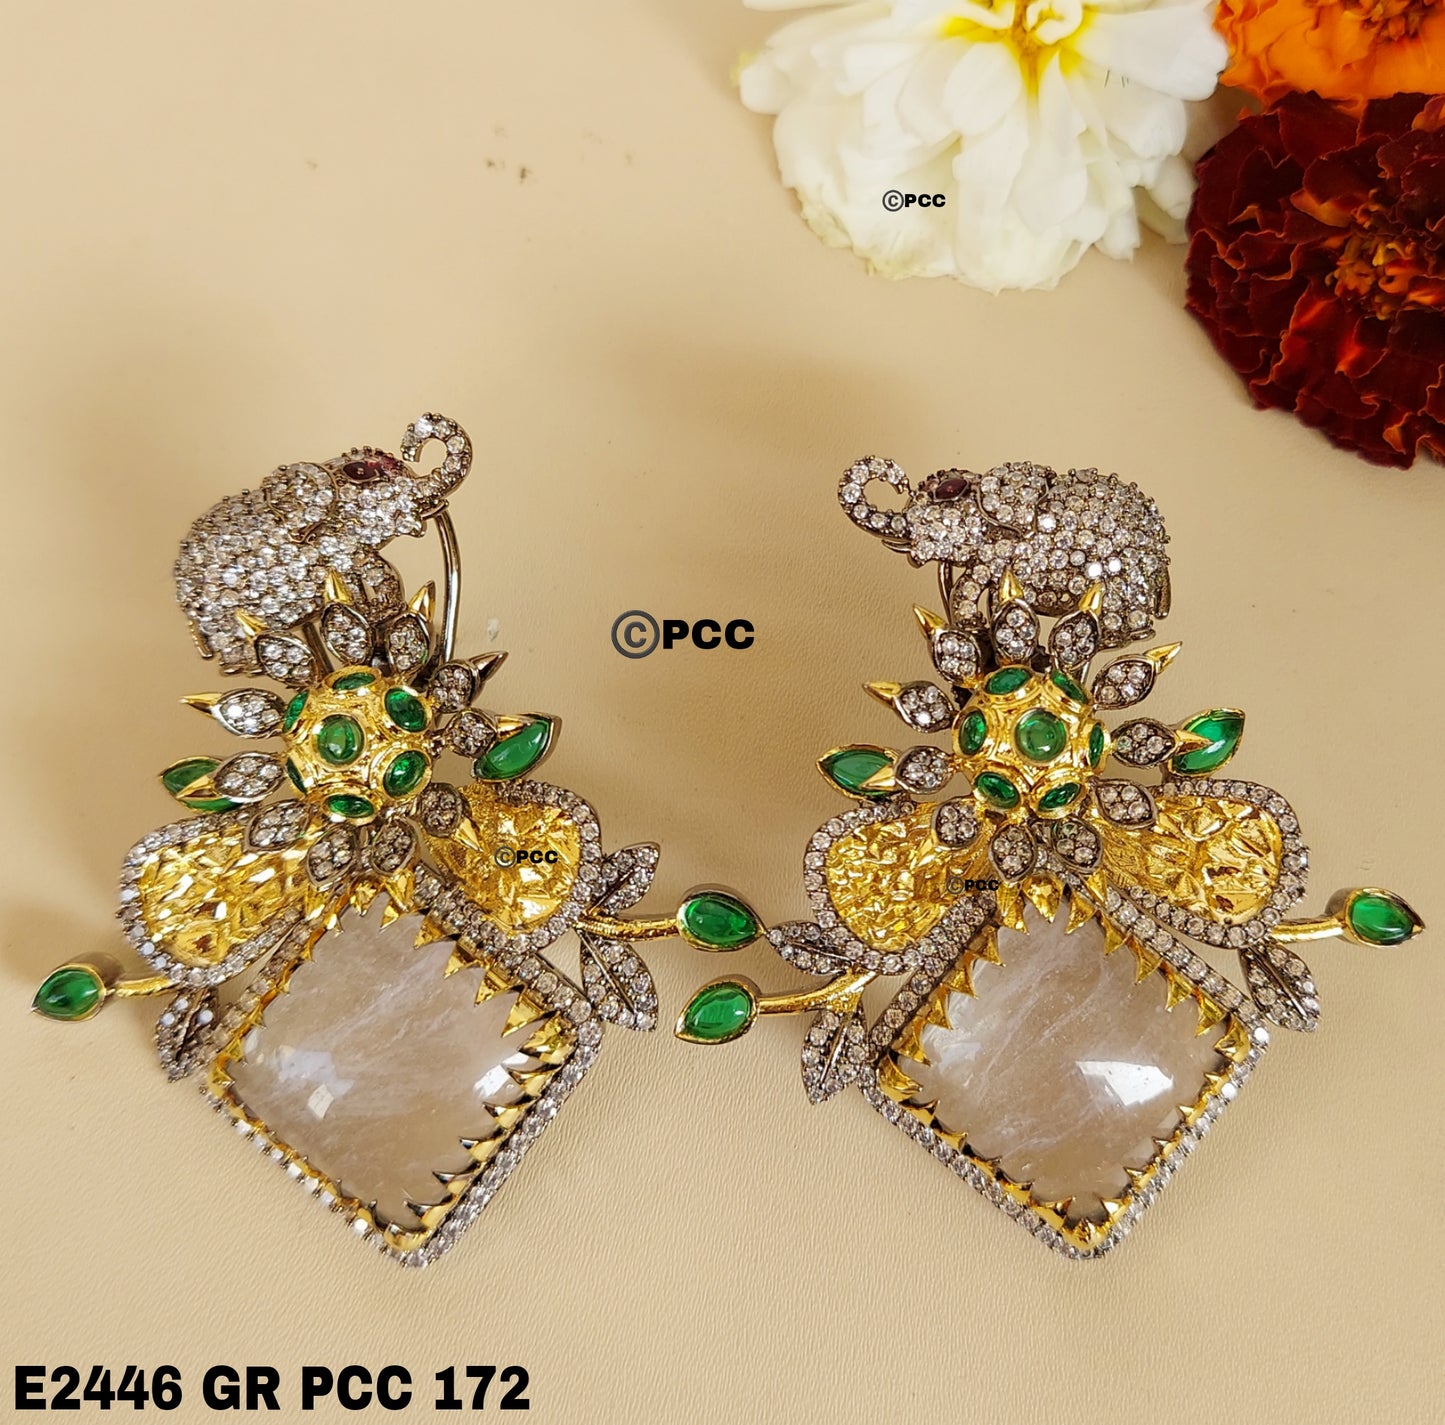 Semi-precious earrings featuring mother of pearl